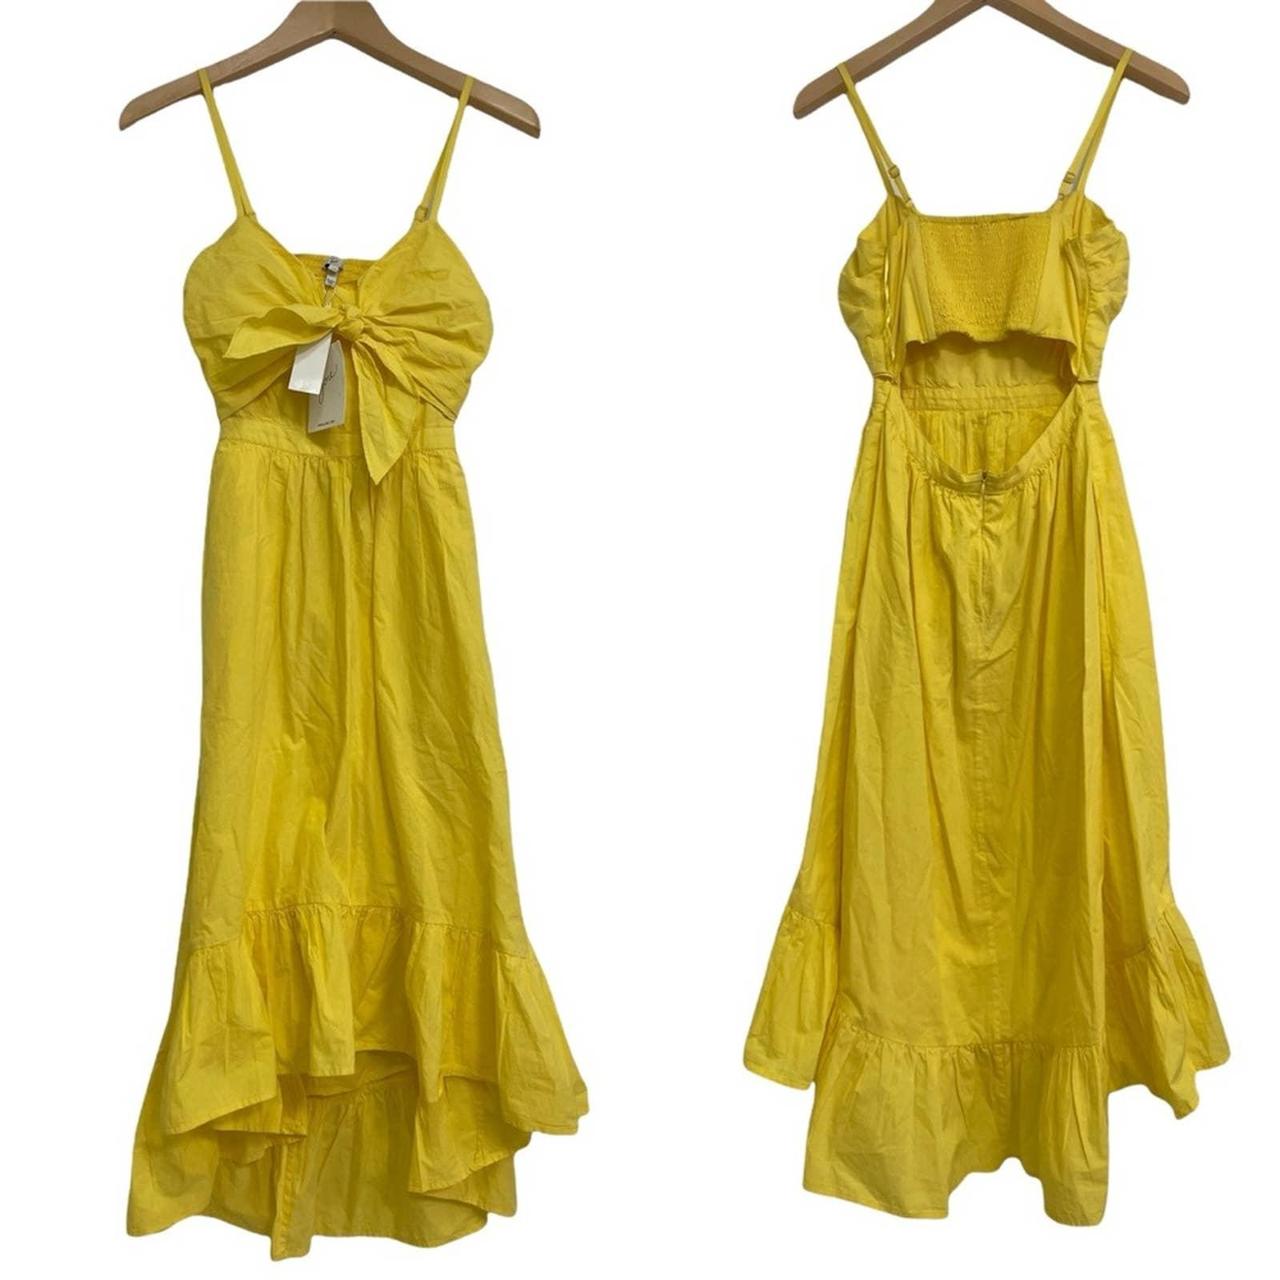 Pineapple Yellow Dress